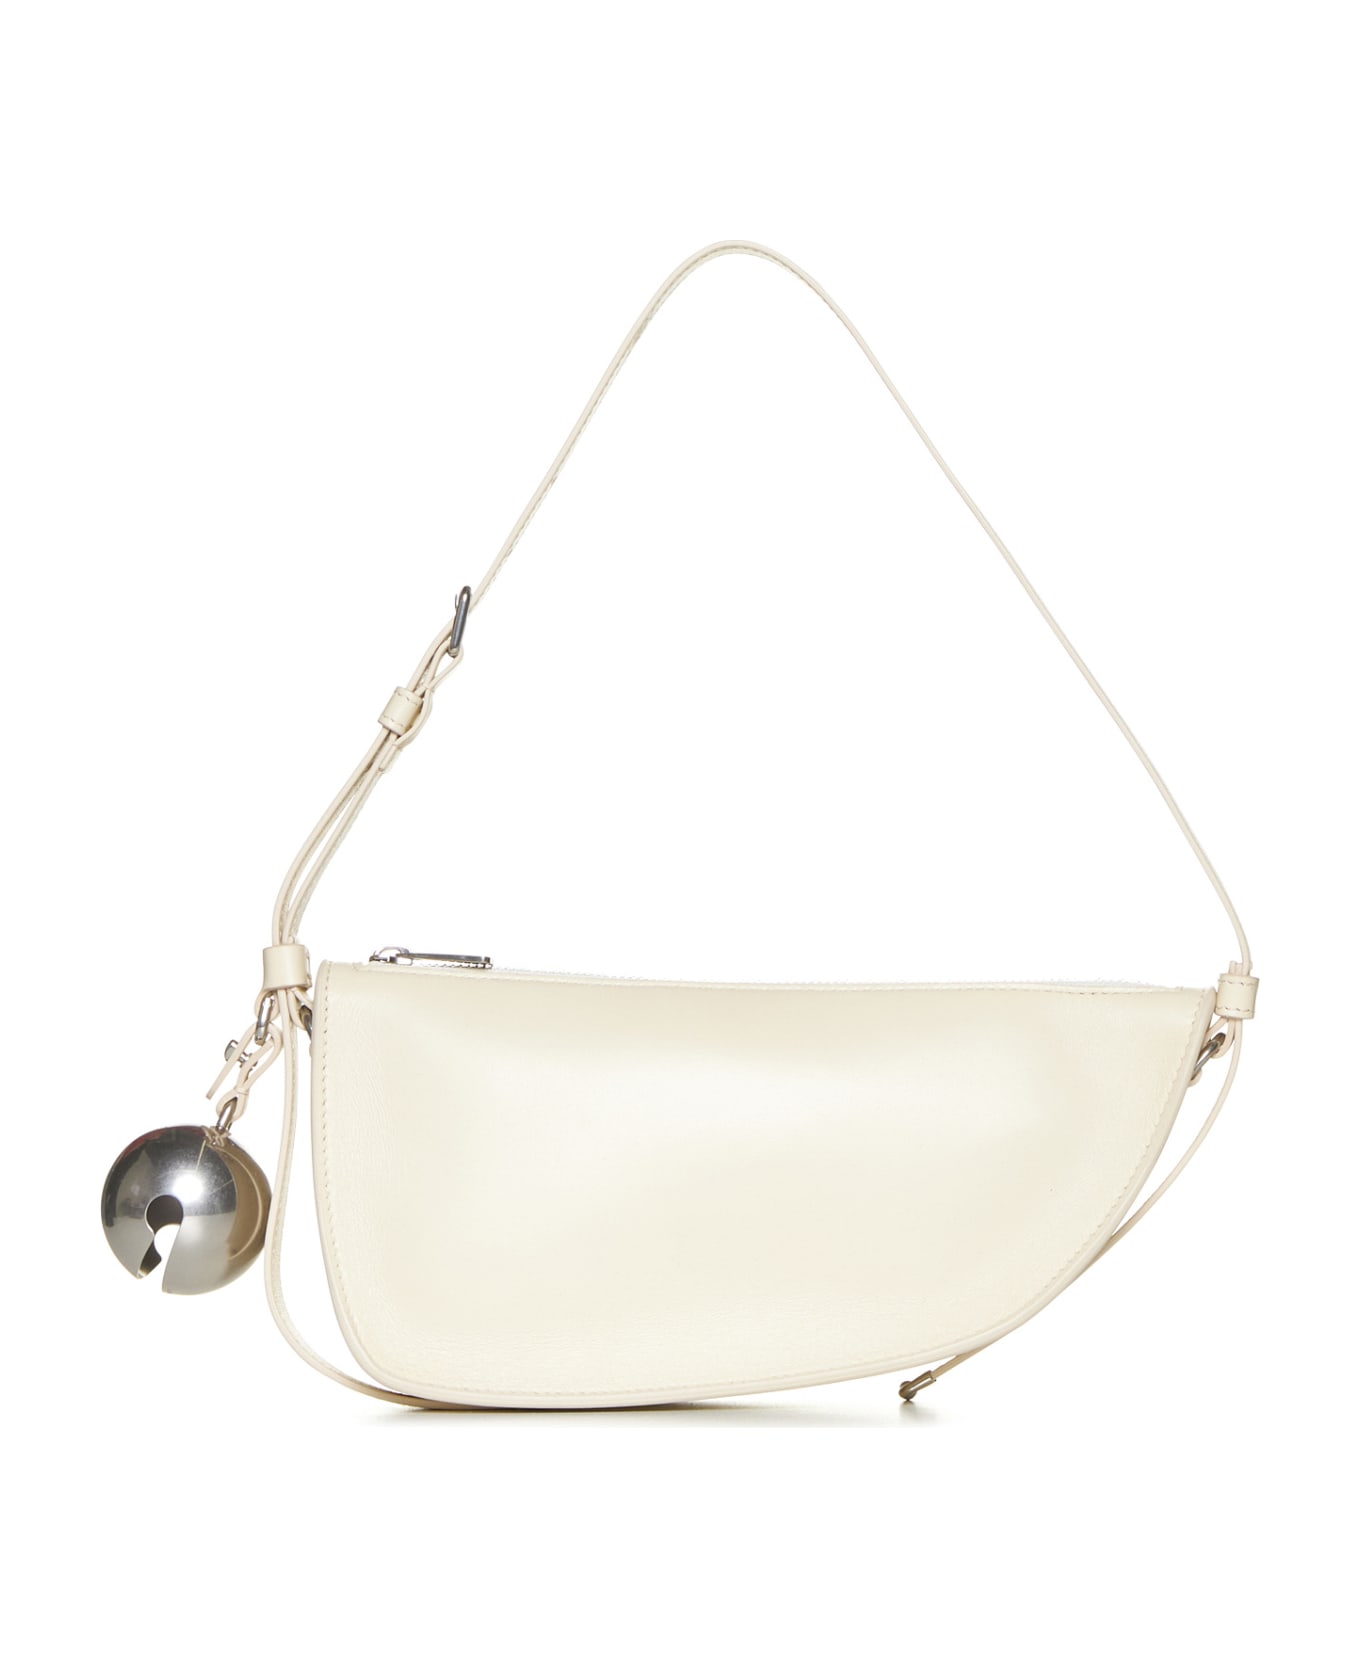 Burberry Shoulder Bag - Pearl